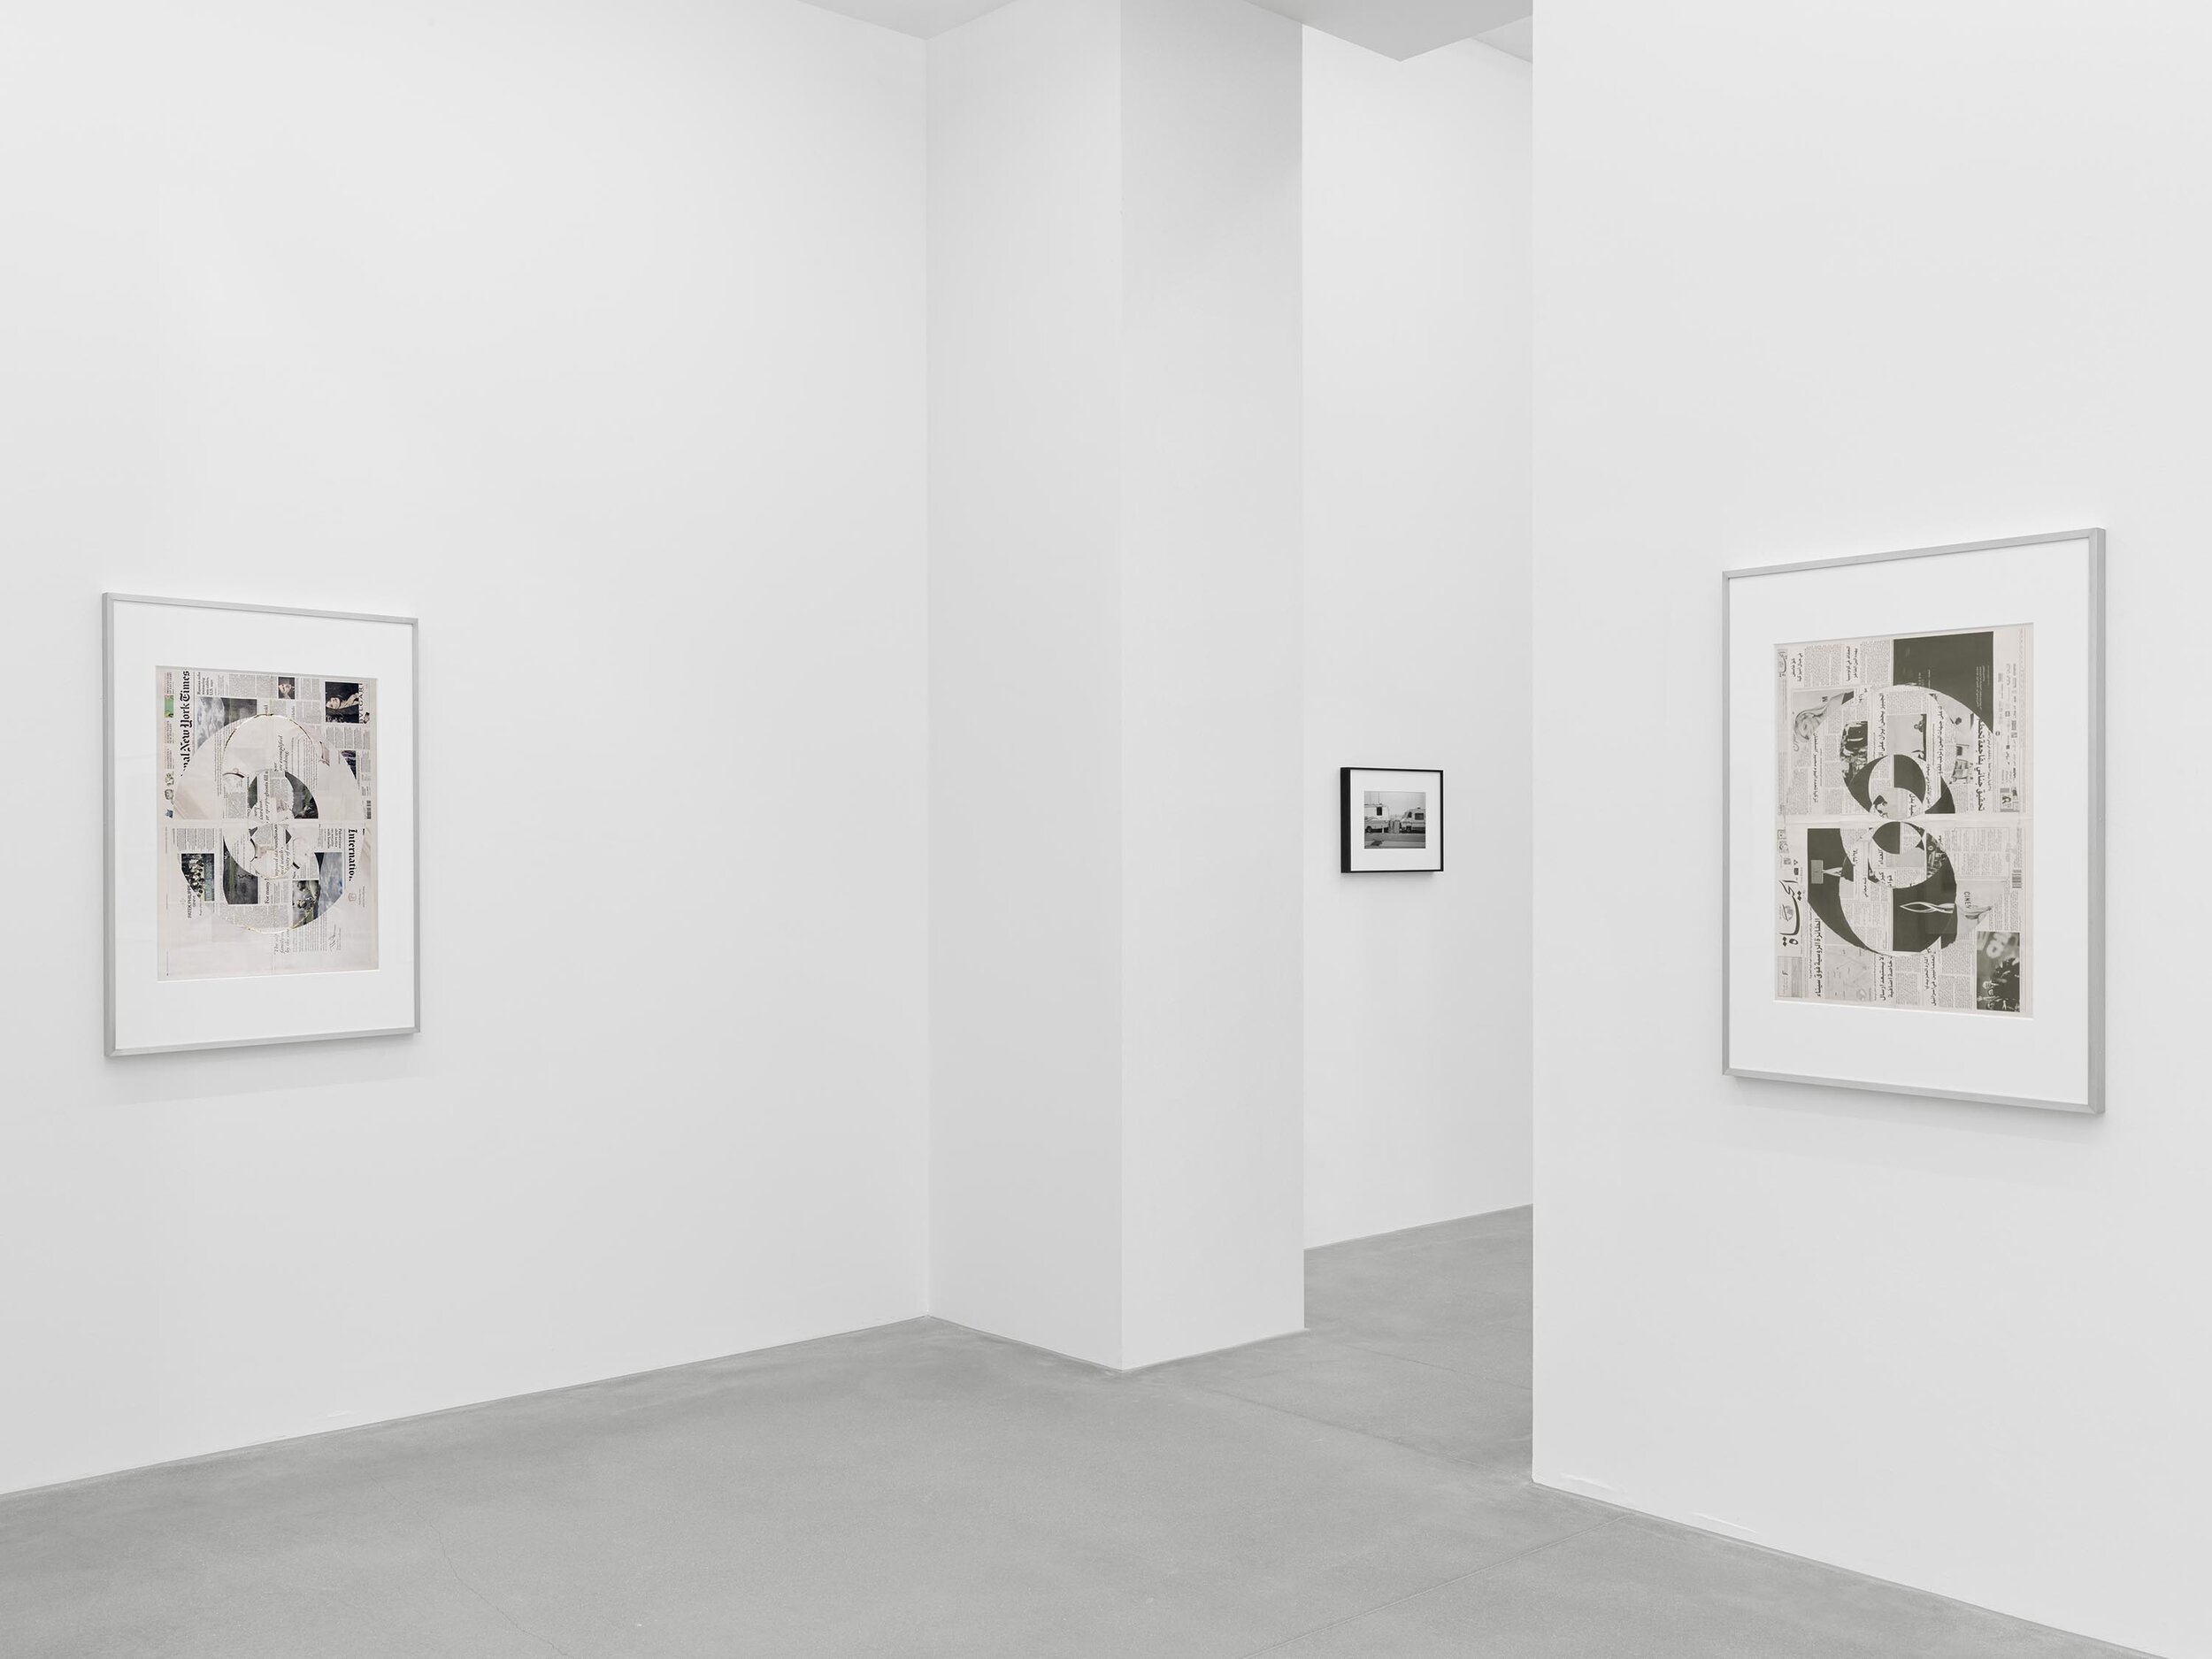   Foreign Correspondence (October 1, 2012 – January 14, 2021)   Galerie Eva Presenhuber, Zurich  2021 